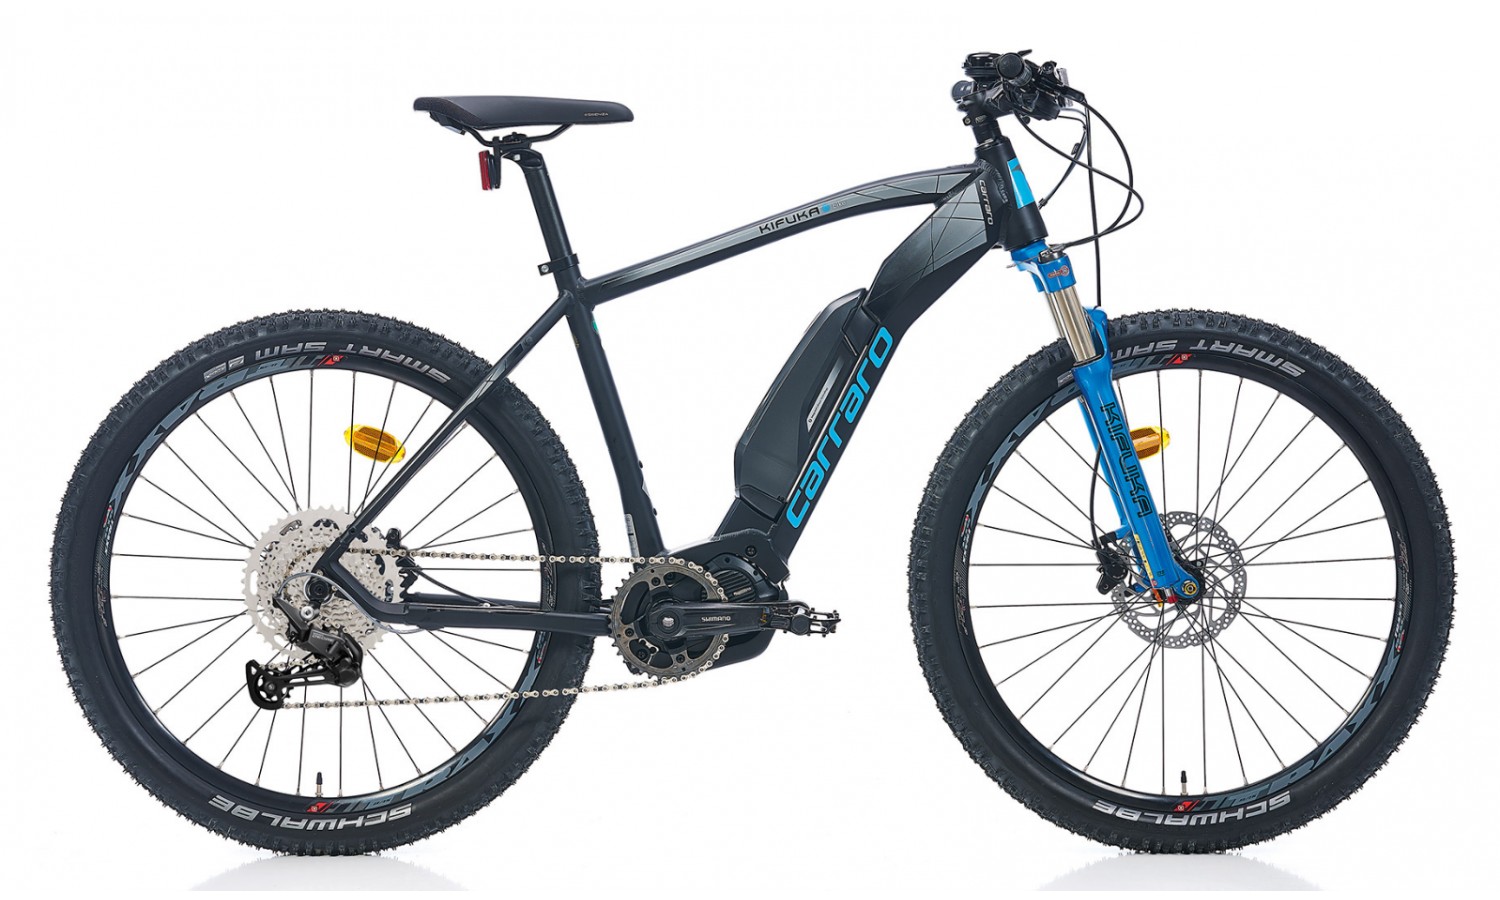 Carraro E-Mtb Kifuka 27.5 Hd Elektrikli Bisiklet (Mat Siyah Mavi)